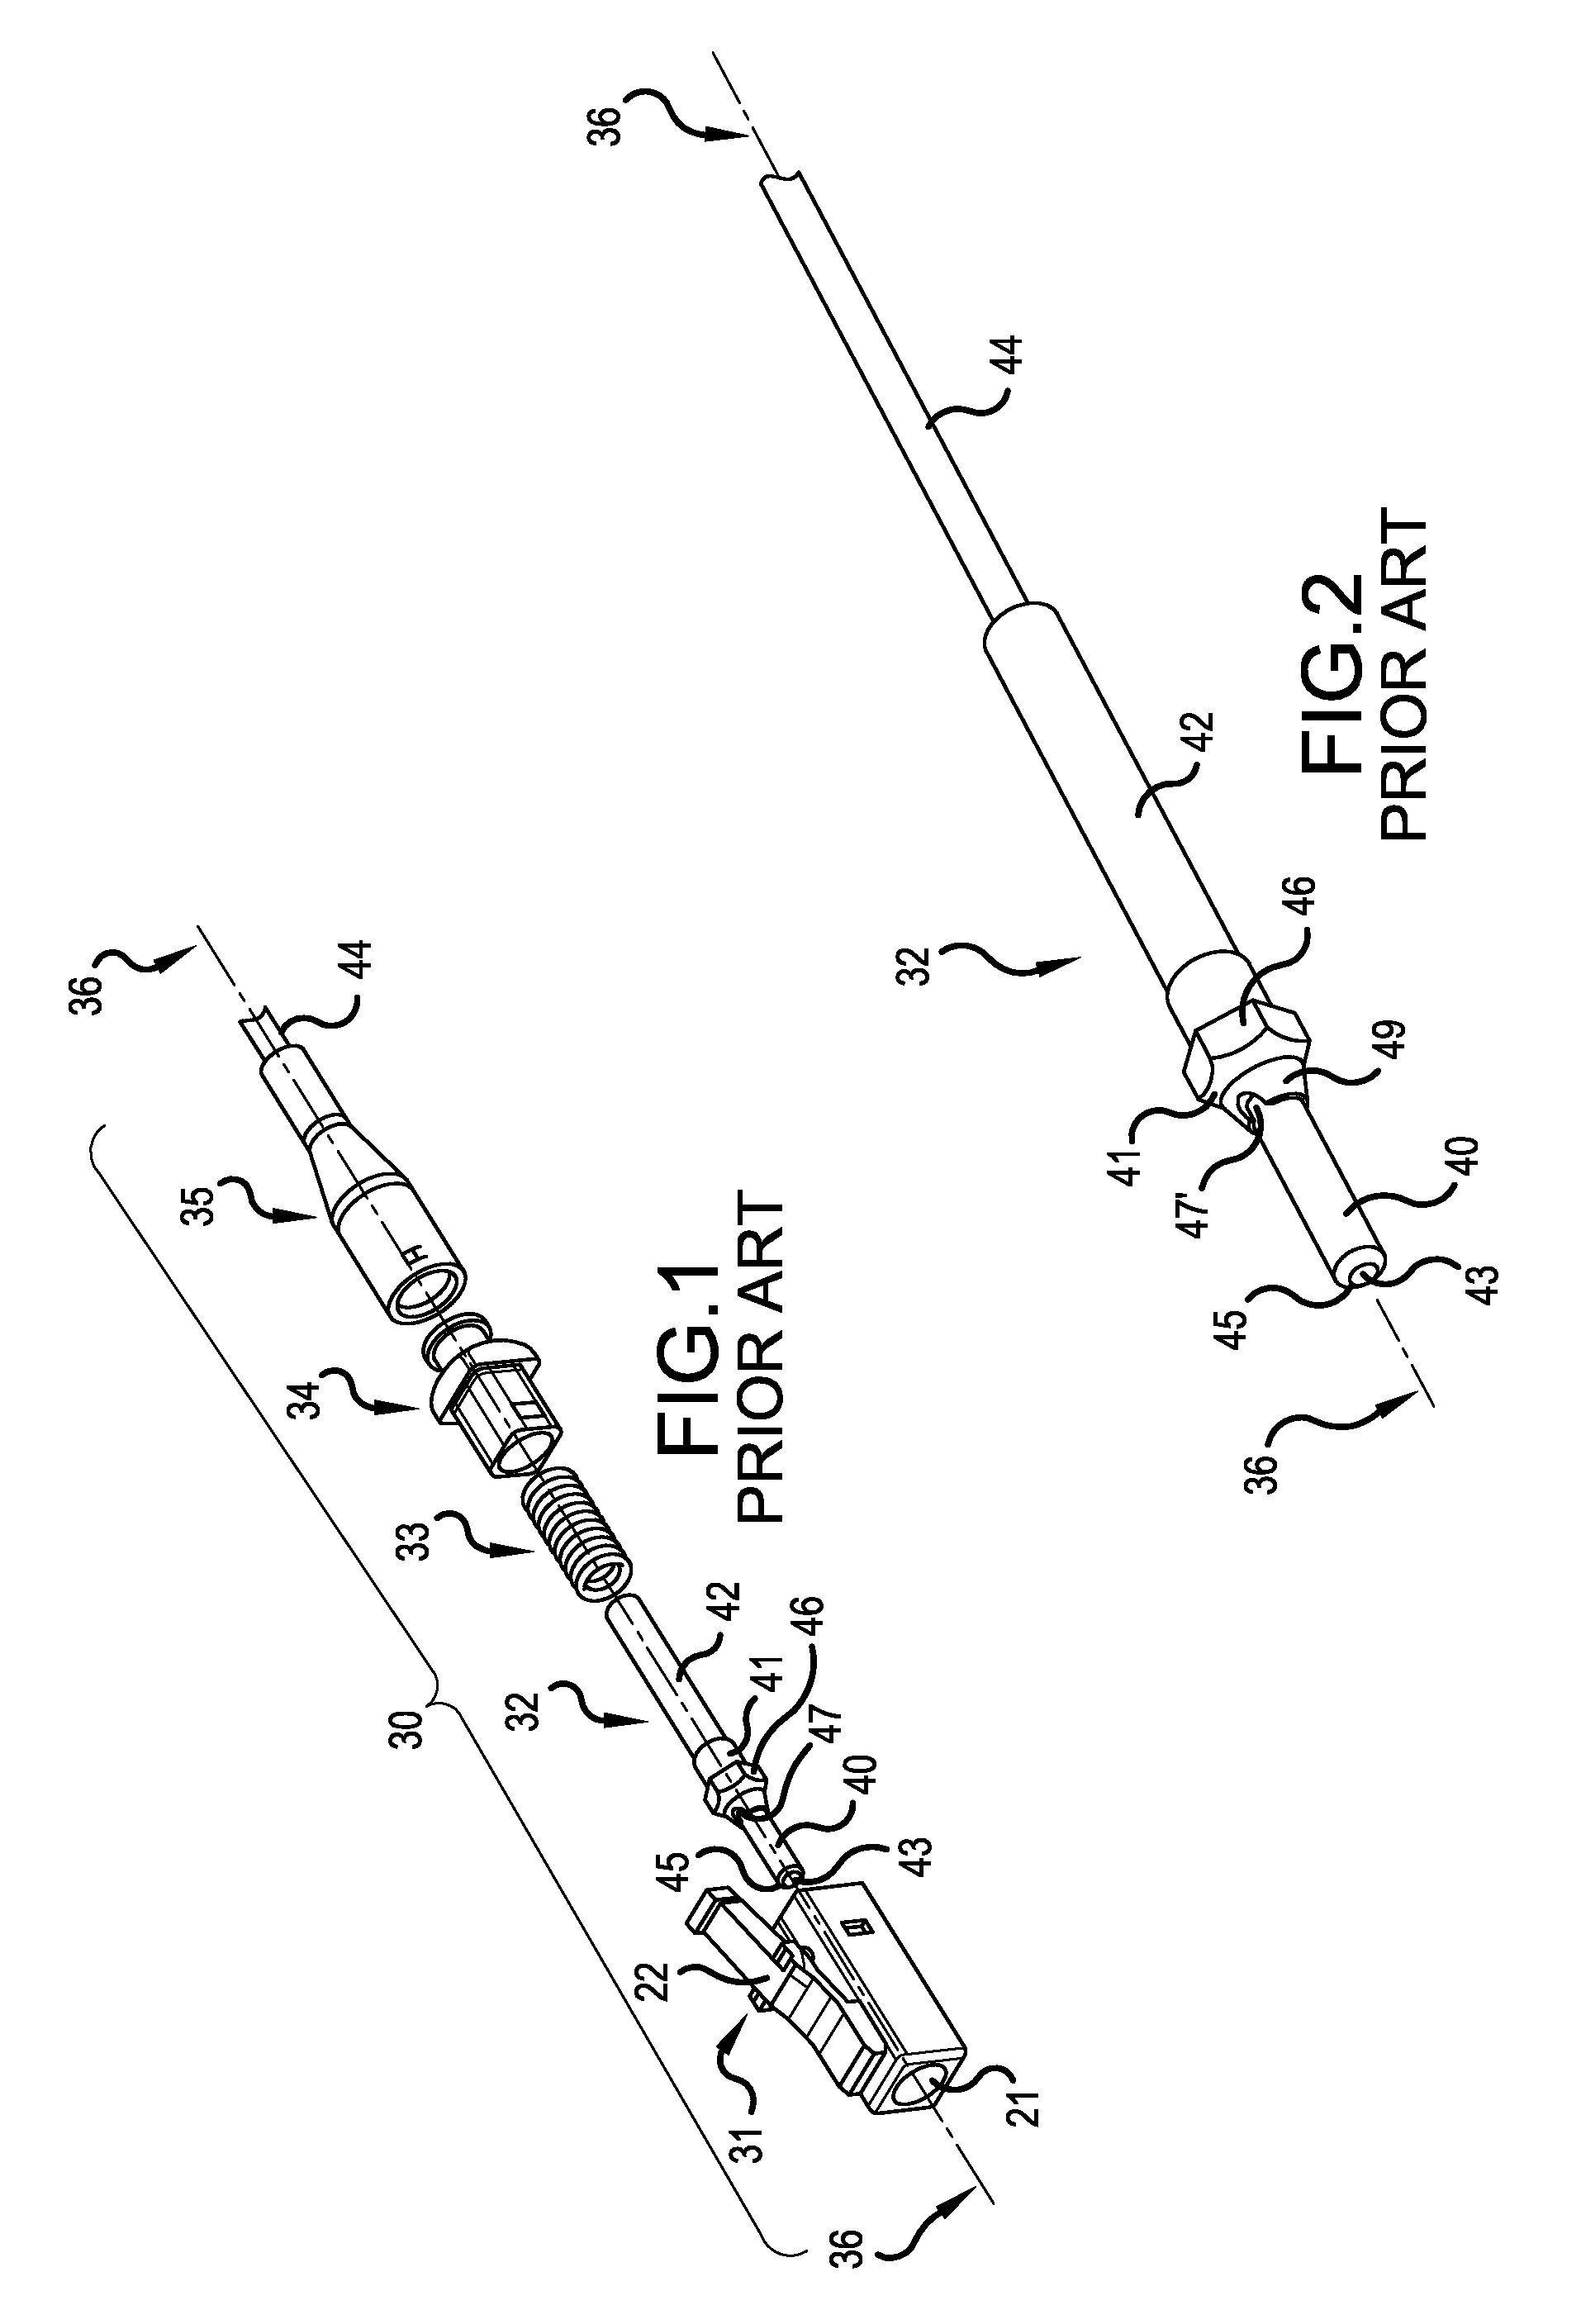 Cylindrical optical ferrule alignment apparatus